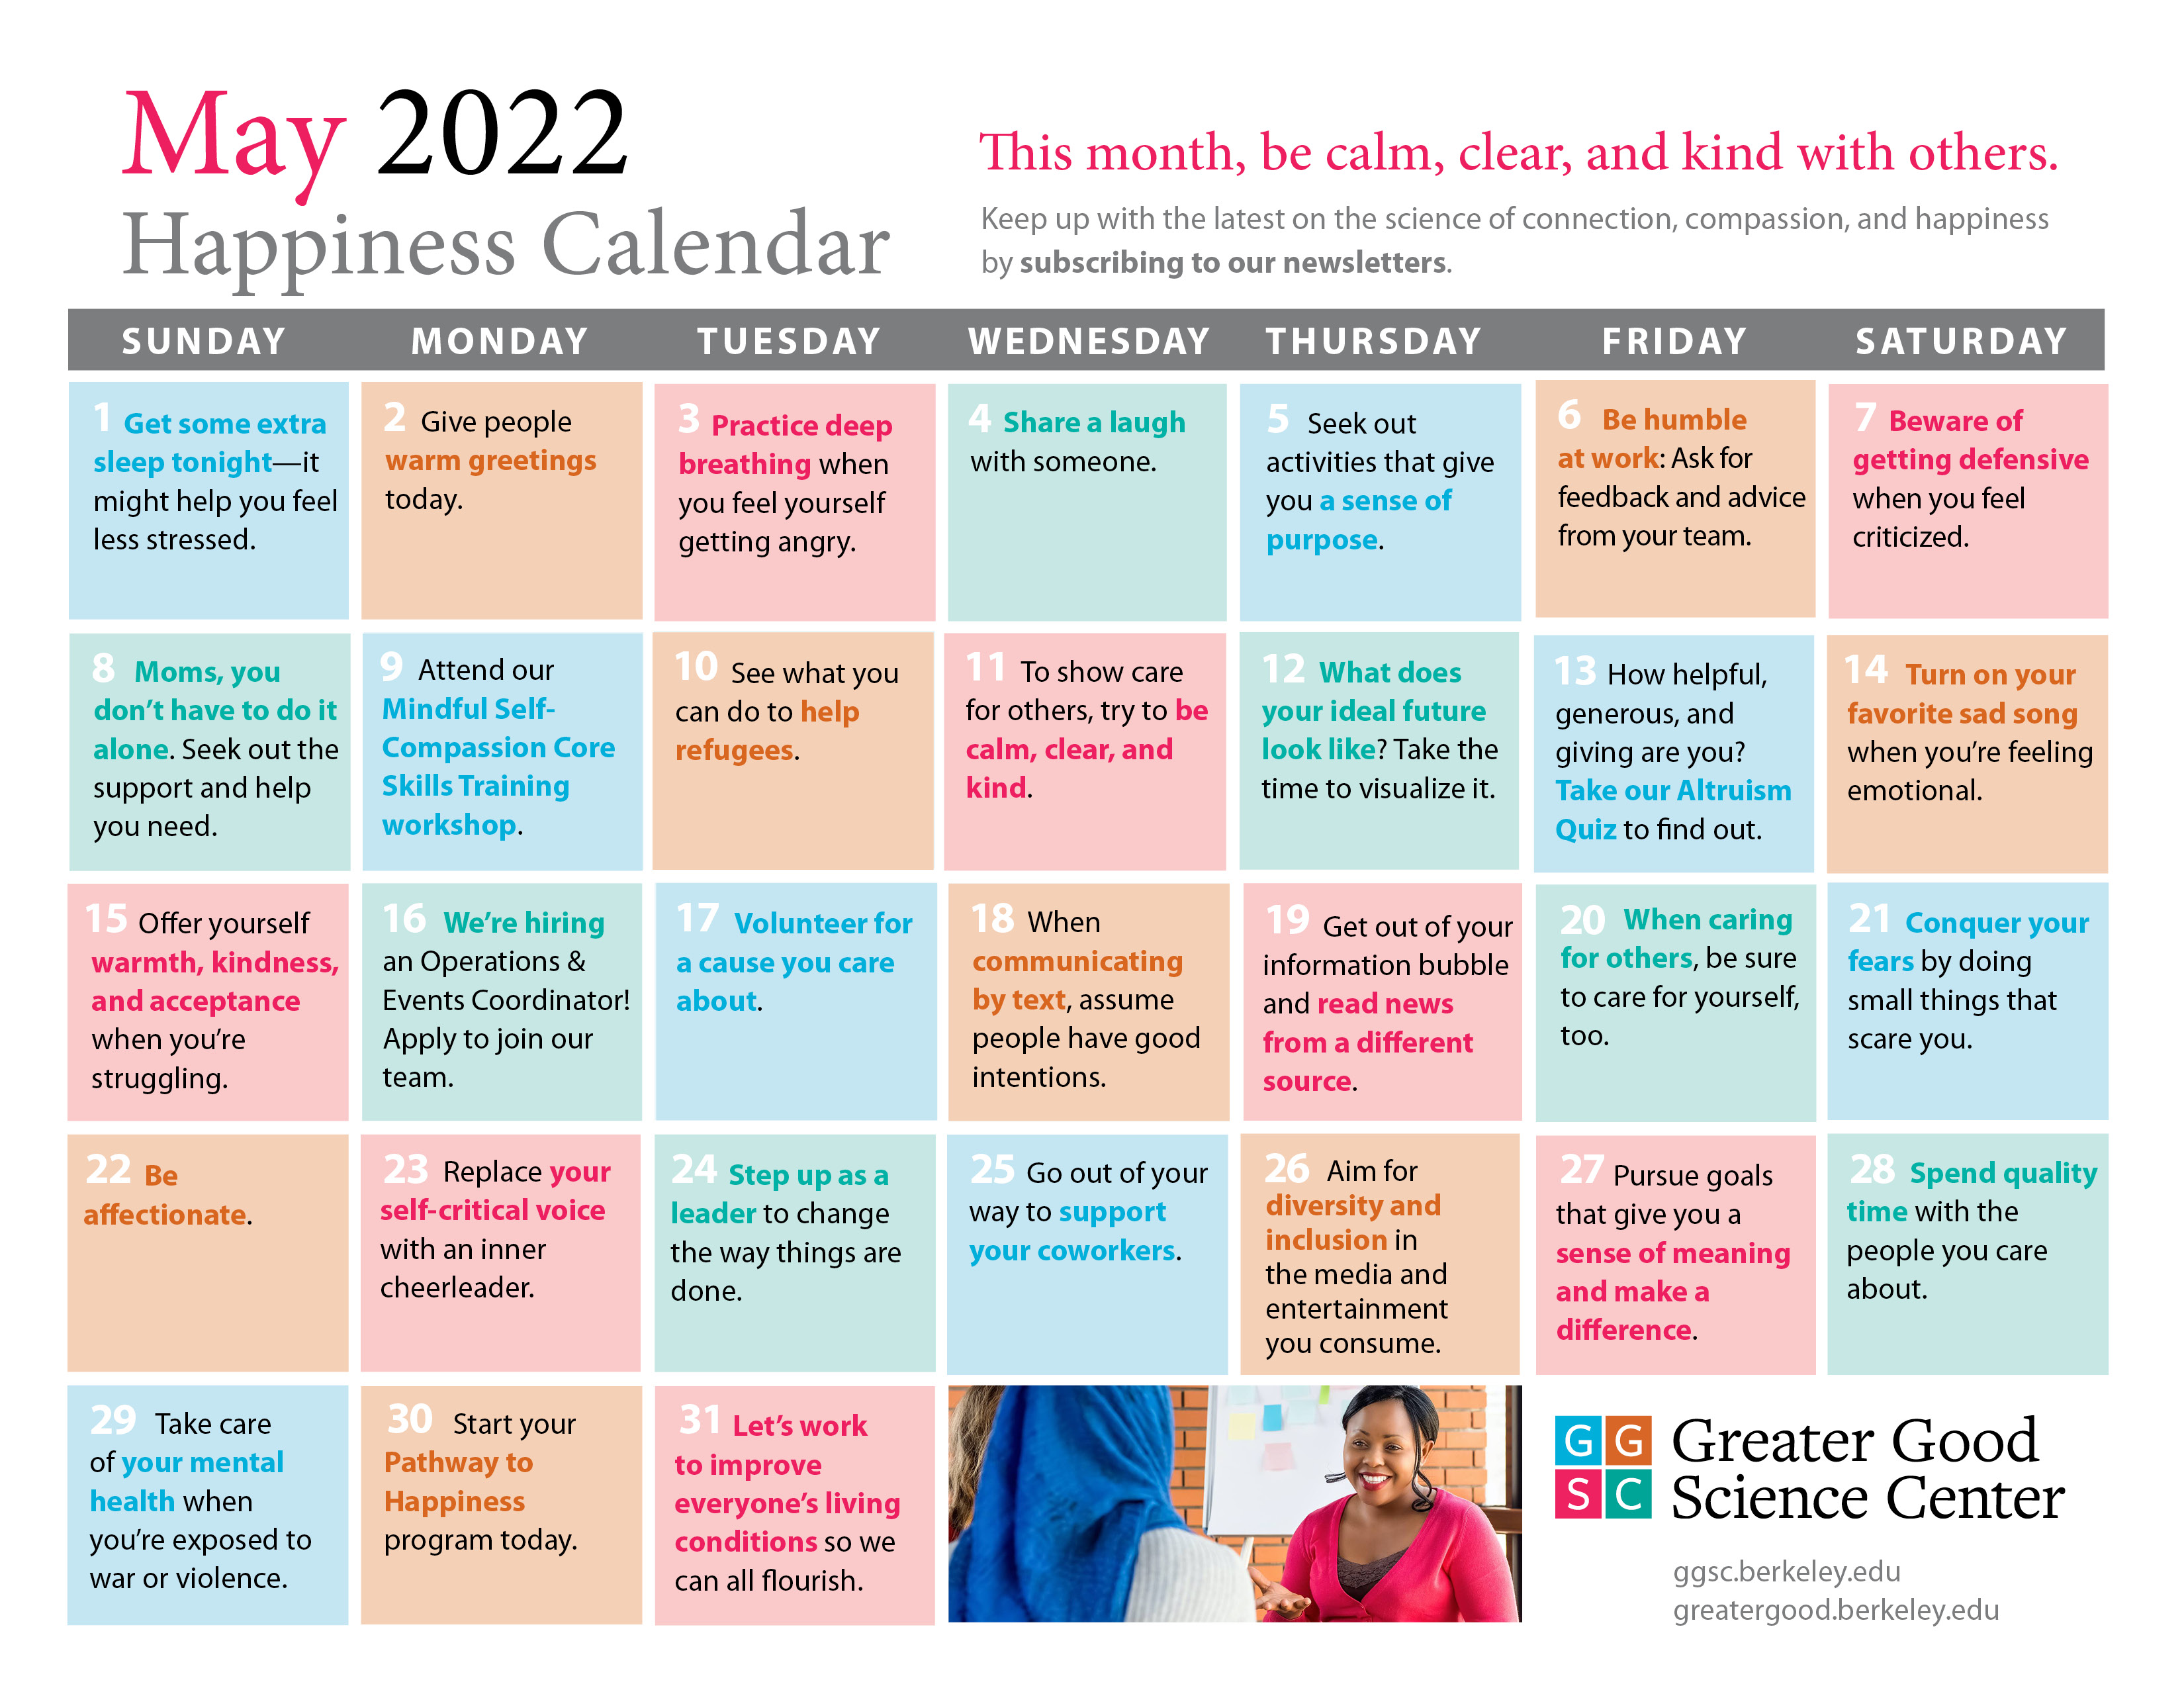 May 2022 happiness calendar